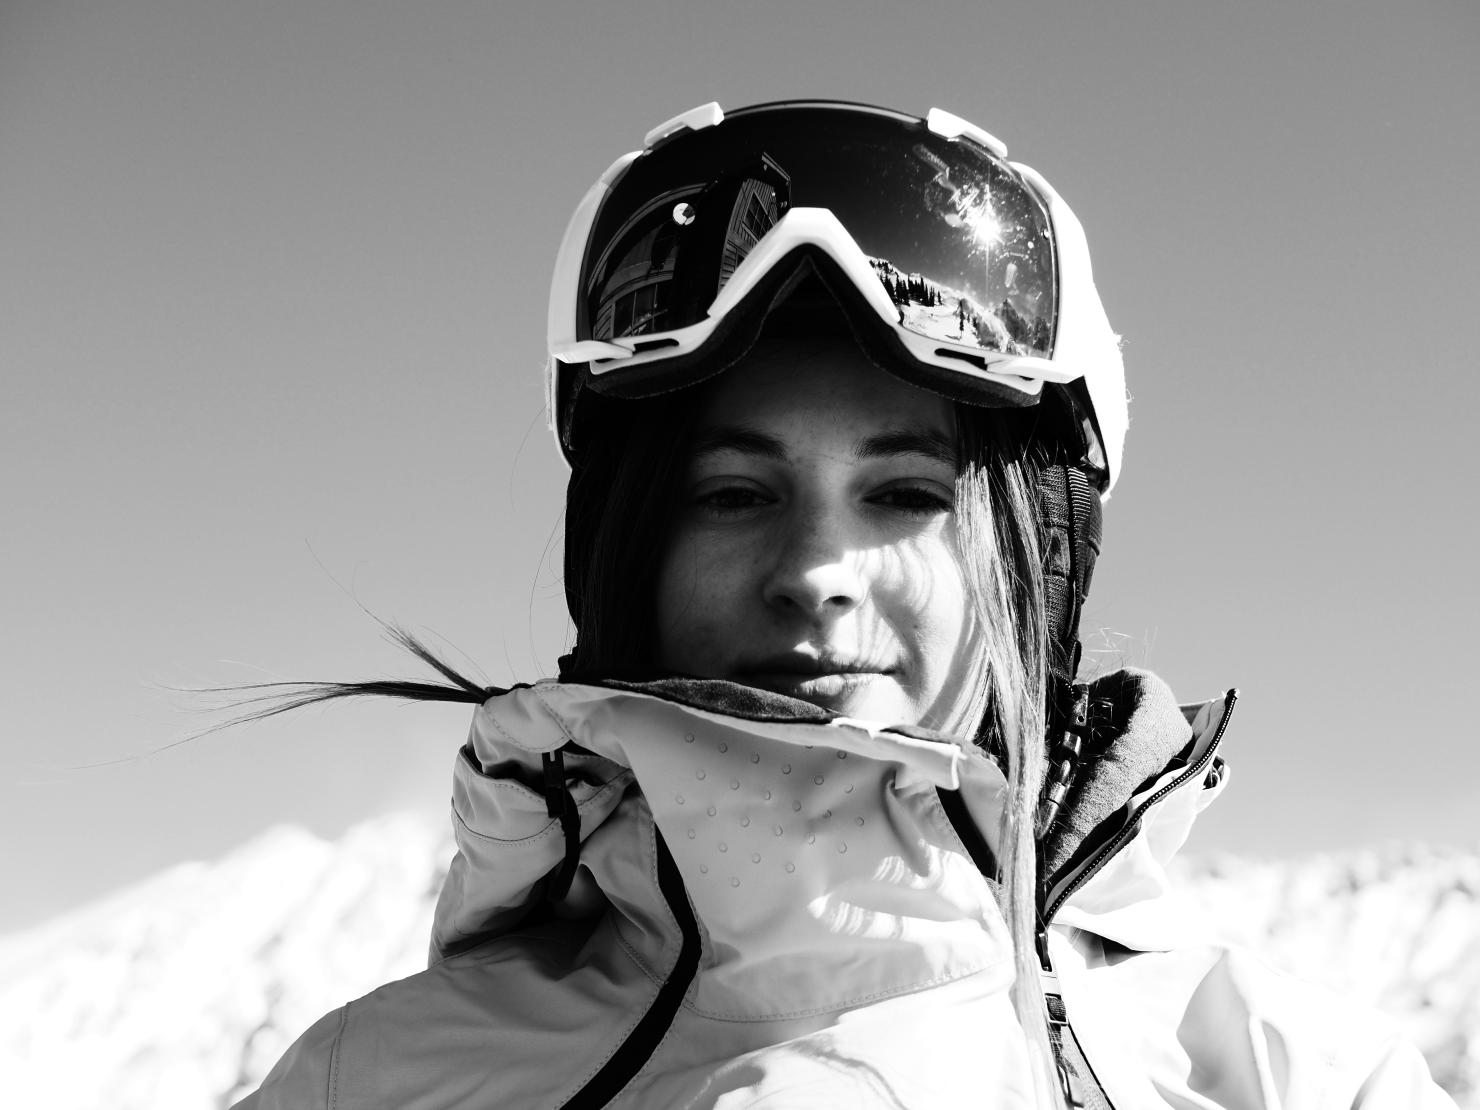 Lauren King headshot in ski goggles and jacket. 